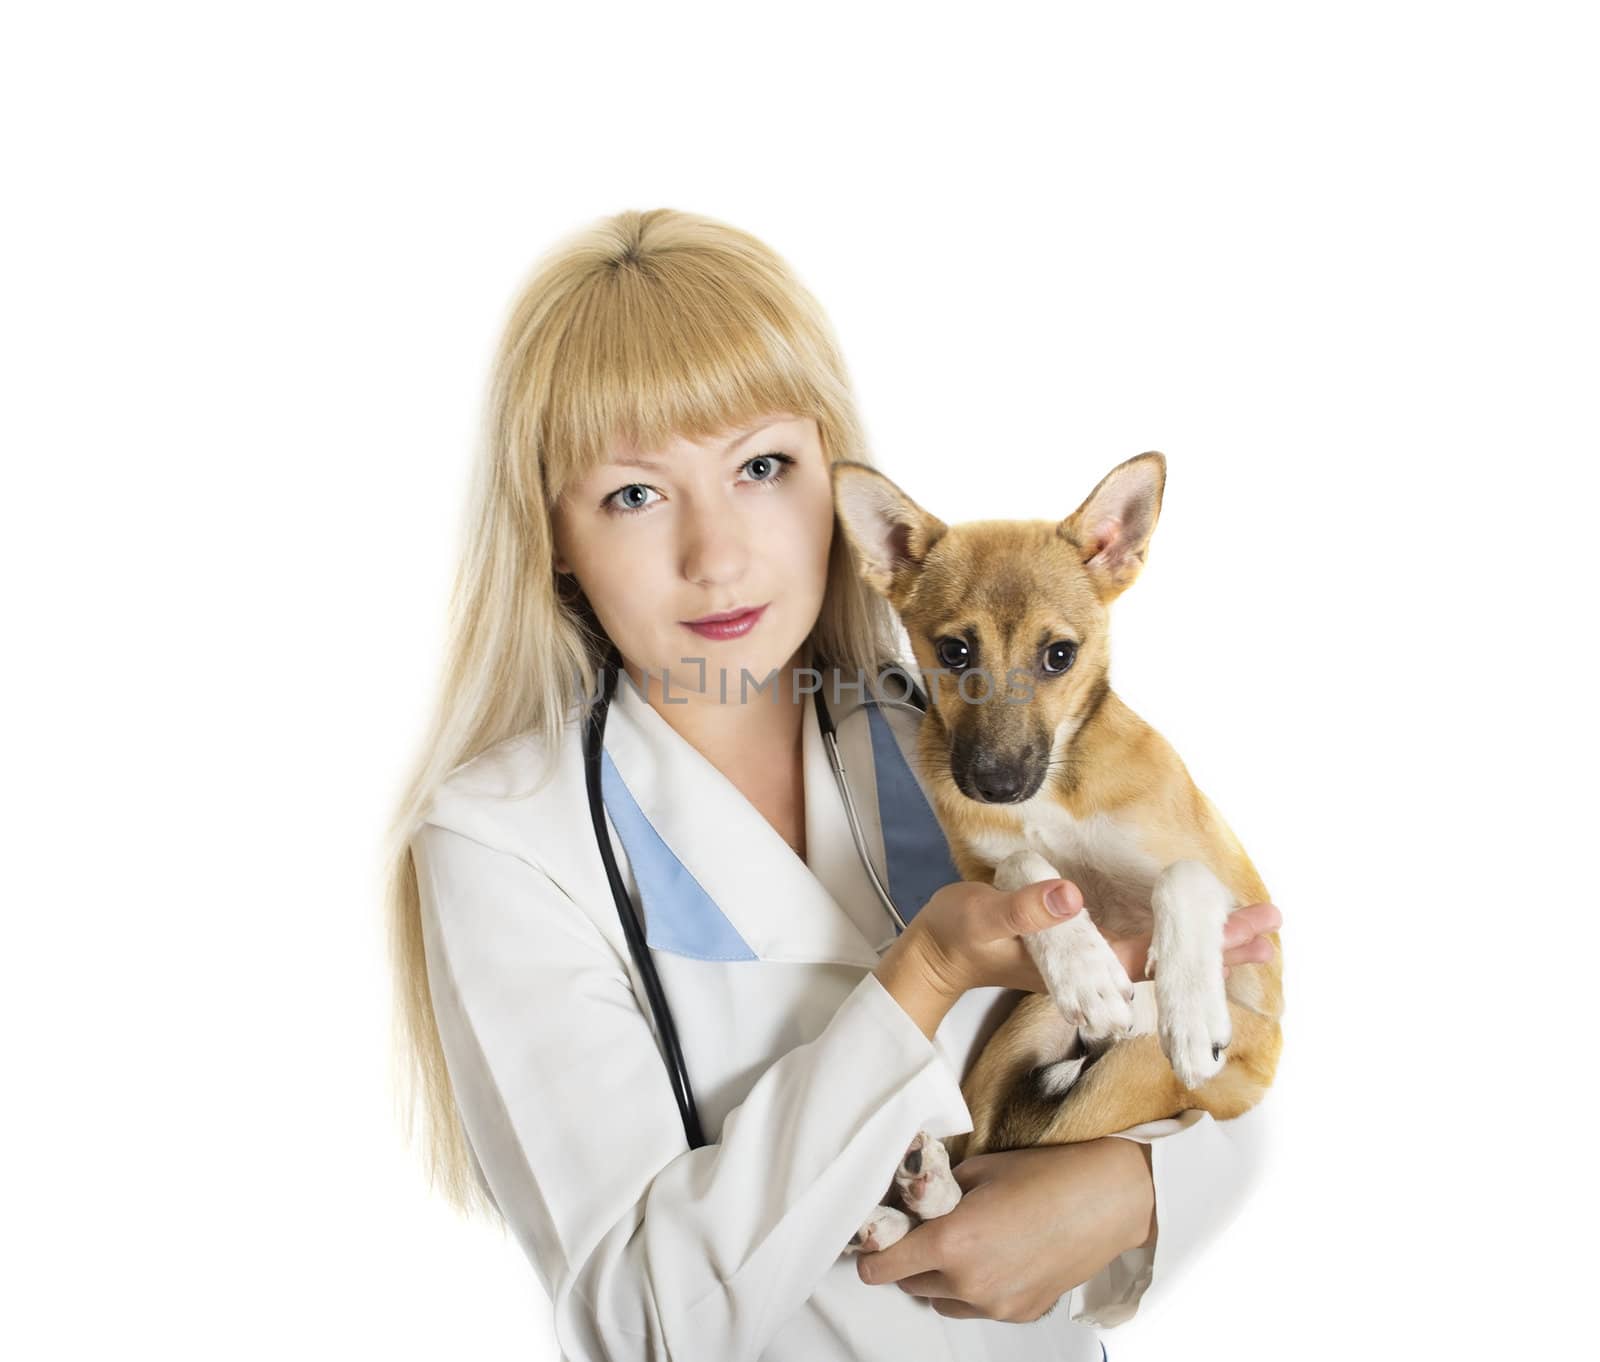 veterinary doctor  by gurin_oleksandr